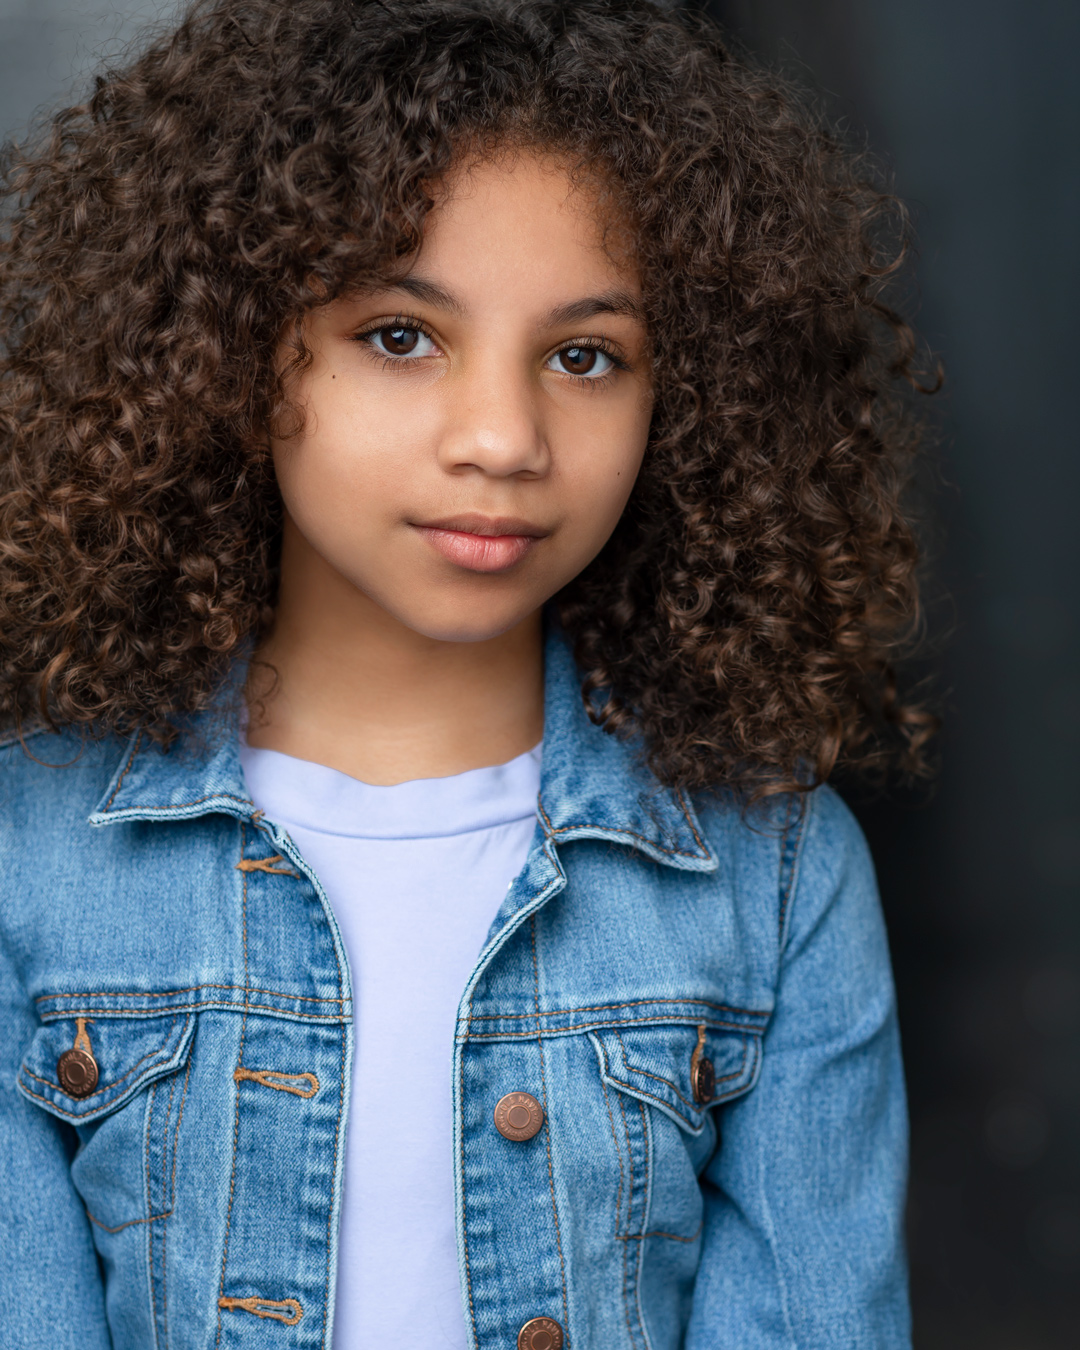 Vancouver child actress Amarah Taylor Headshot